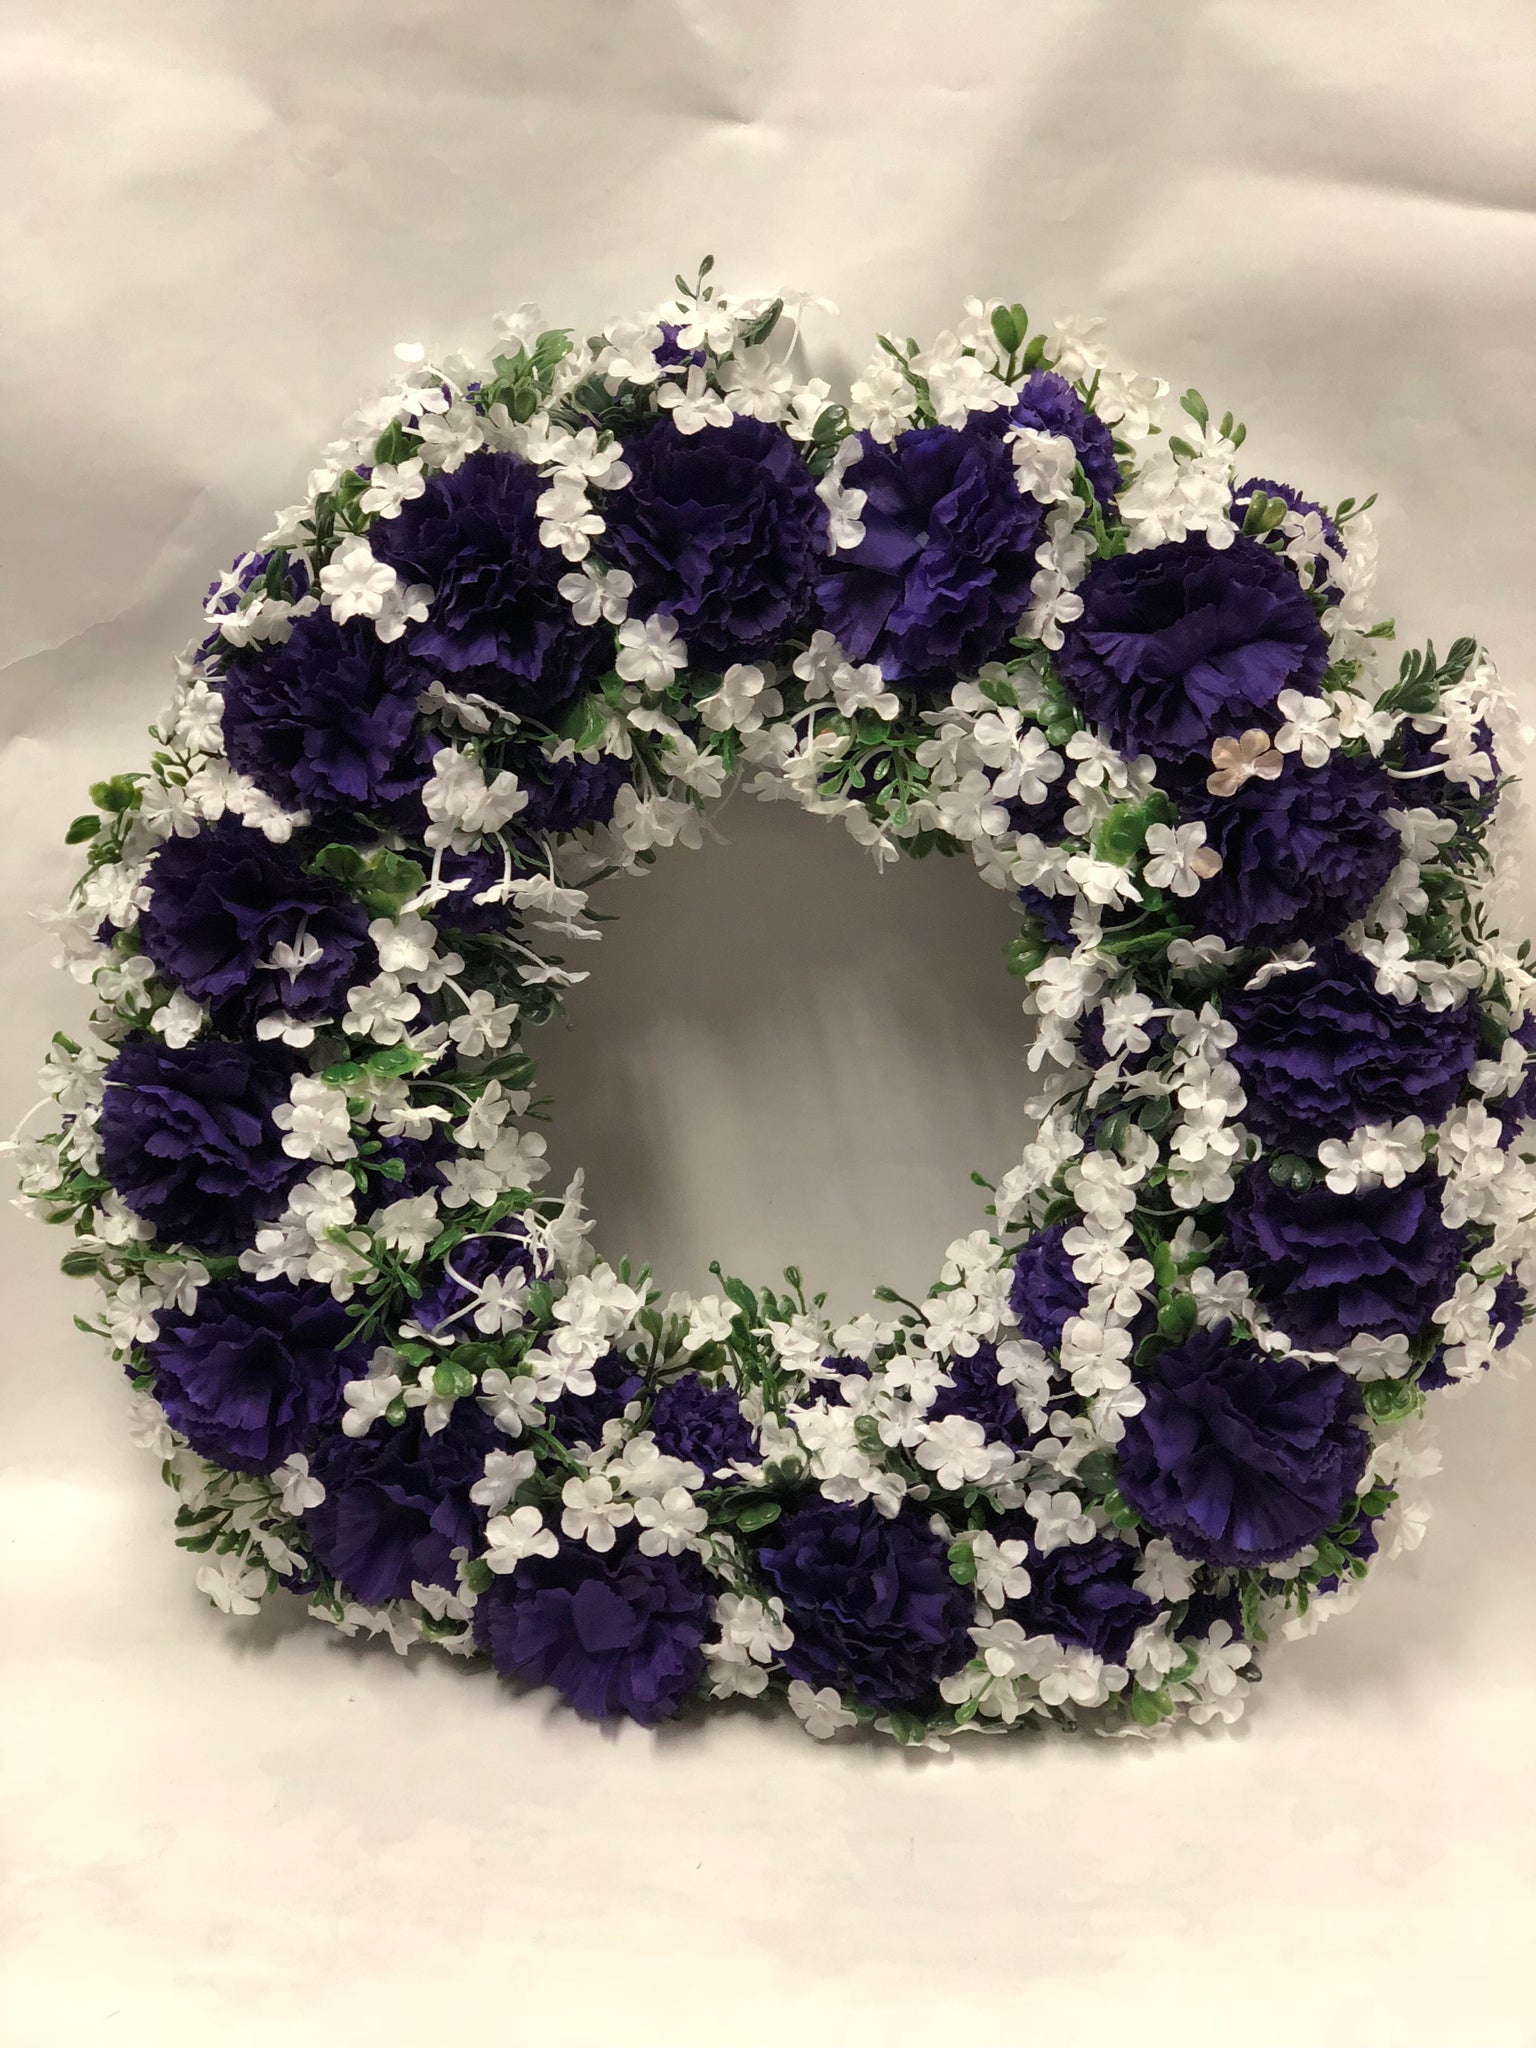 Artificial Memorial / Cemetery Wreath -Dark Purple and White